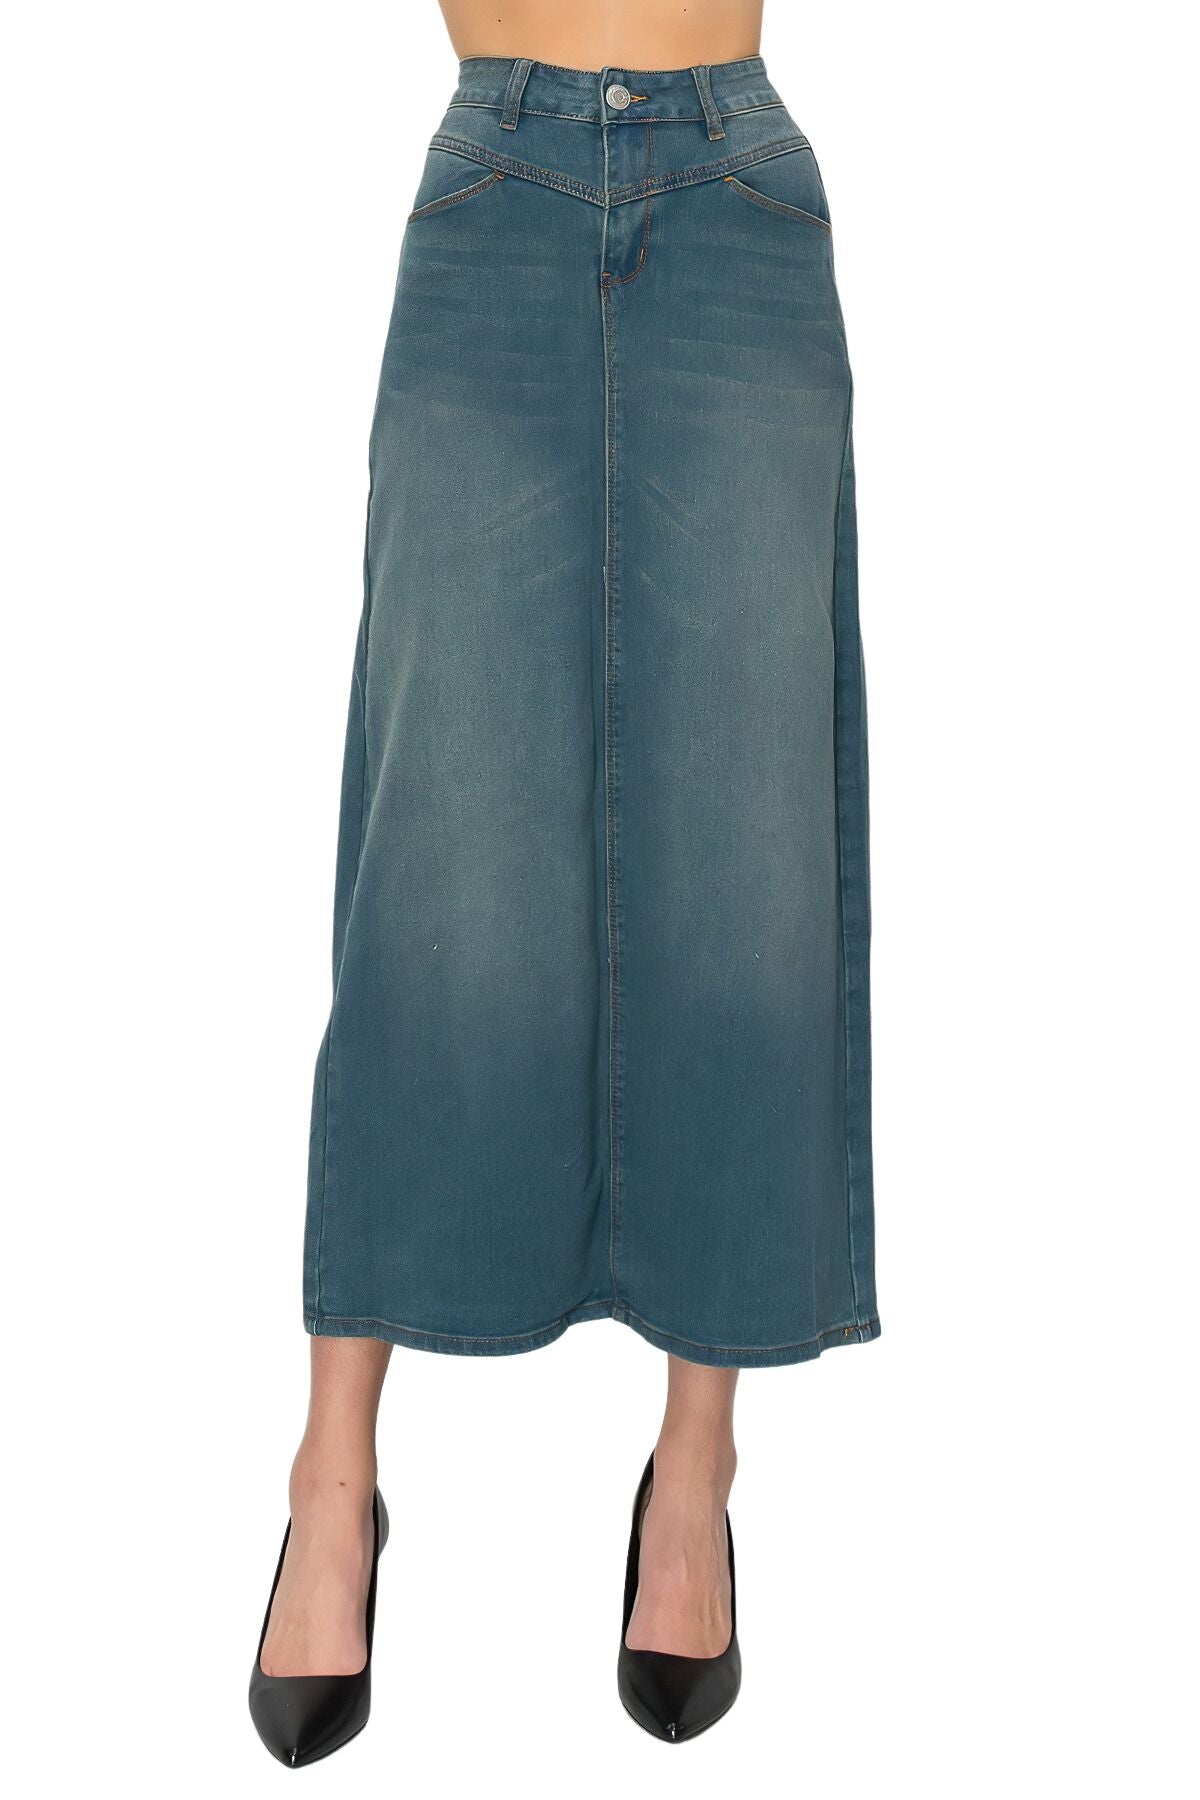 Skirts | Vintage Glensport Black Midi Aline Skirt Made In Canada Size 6 |  Poshmark